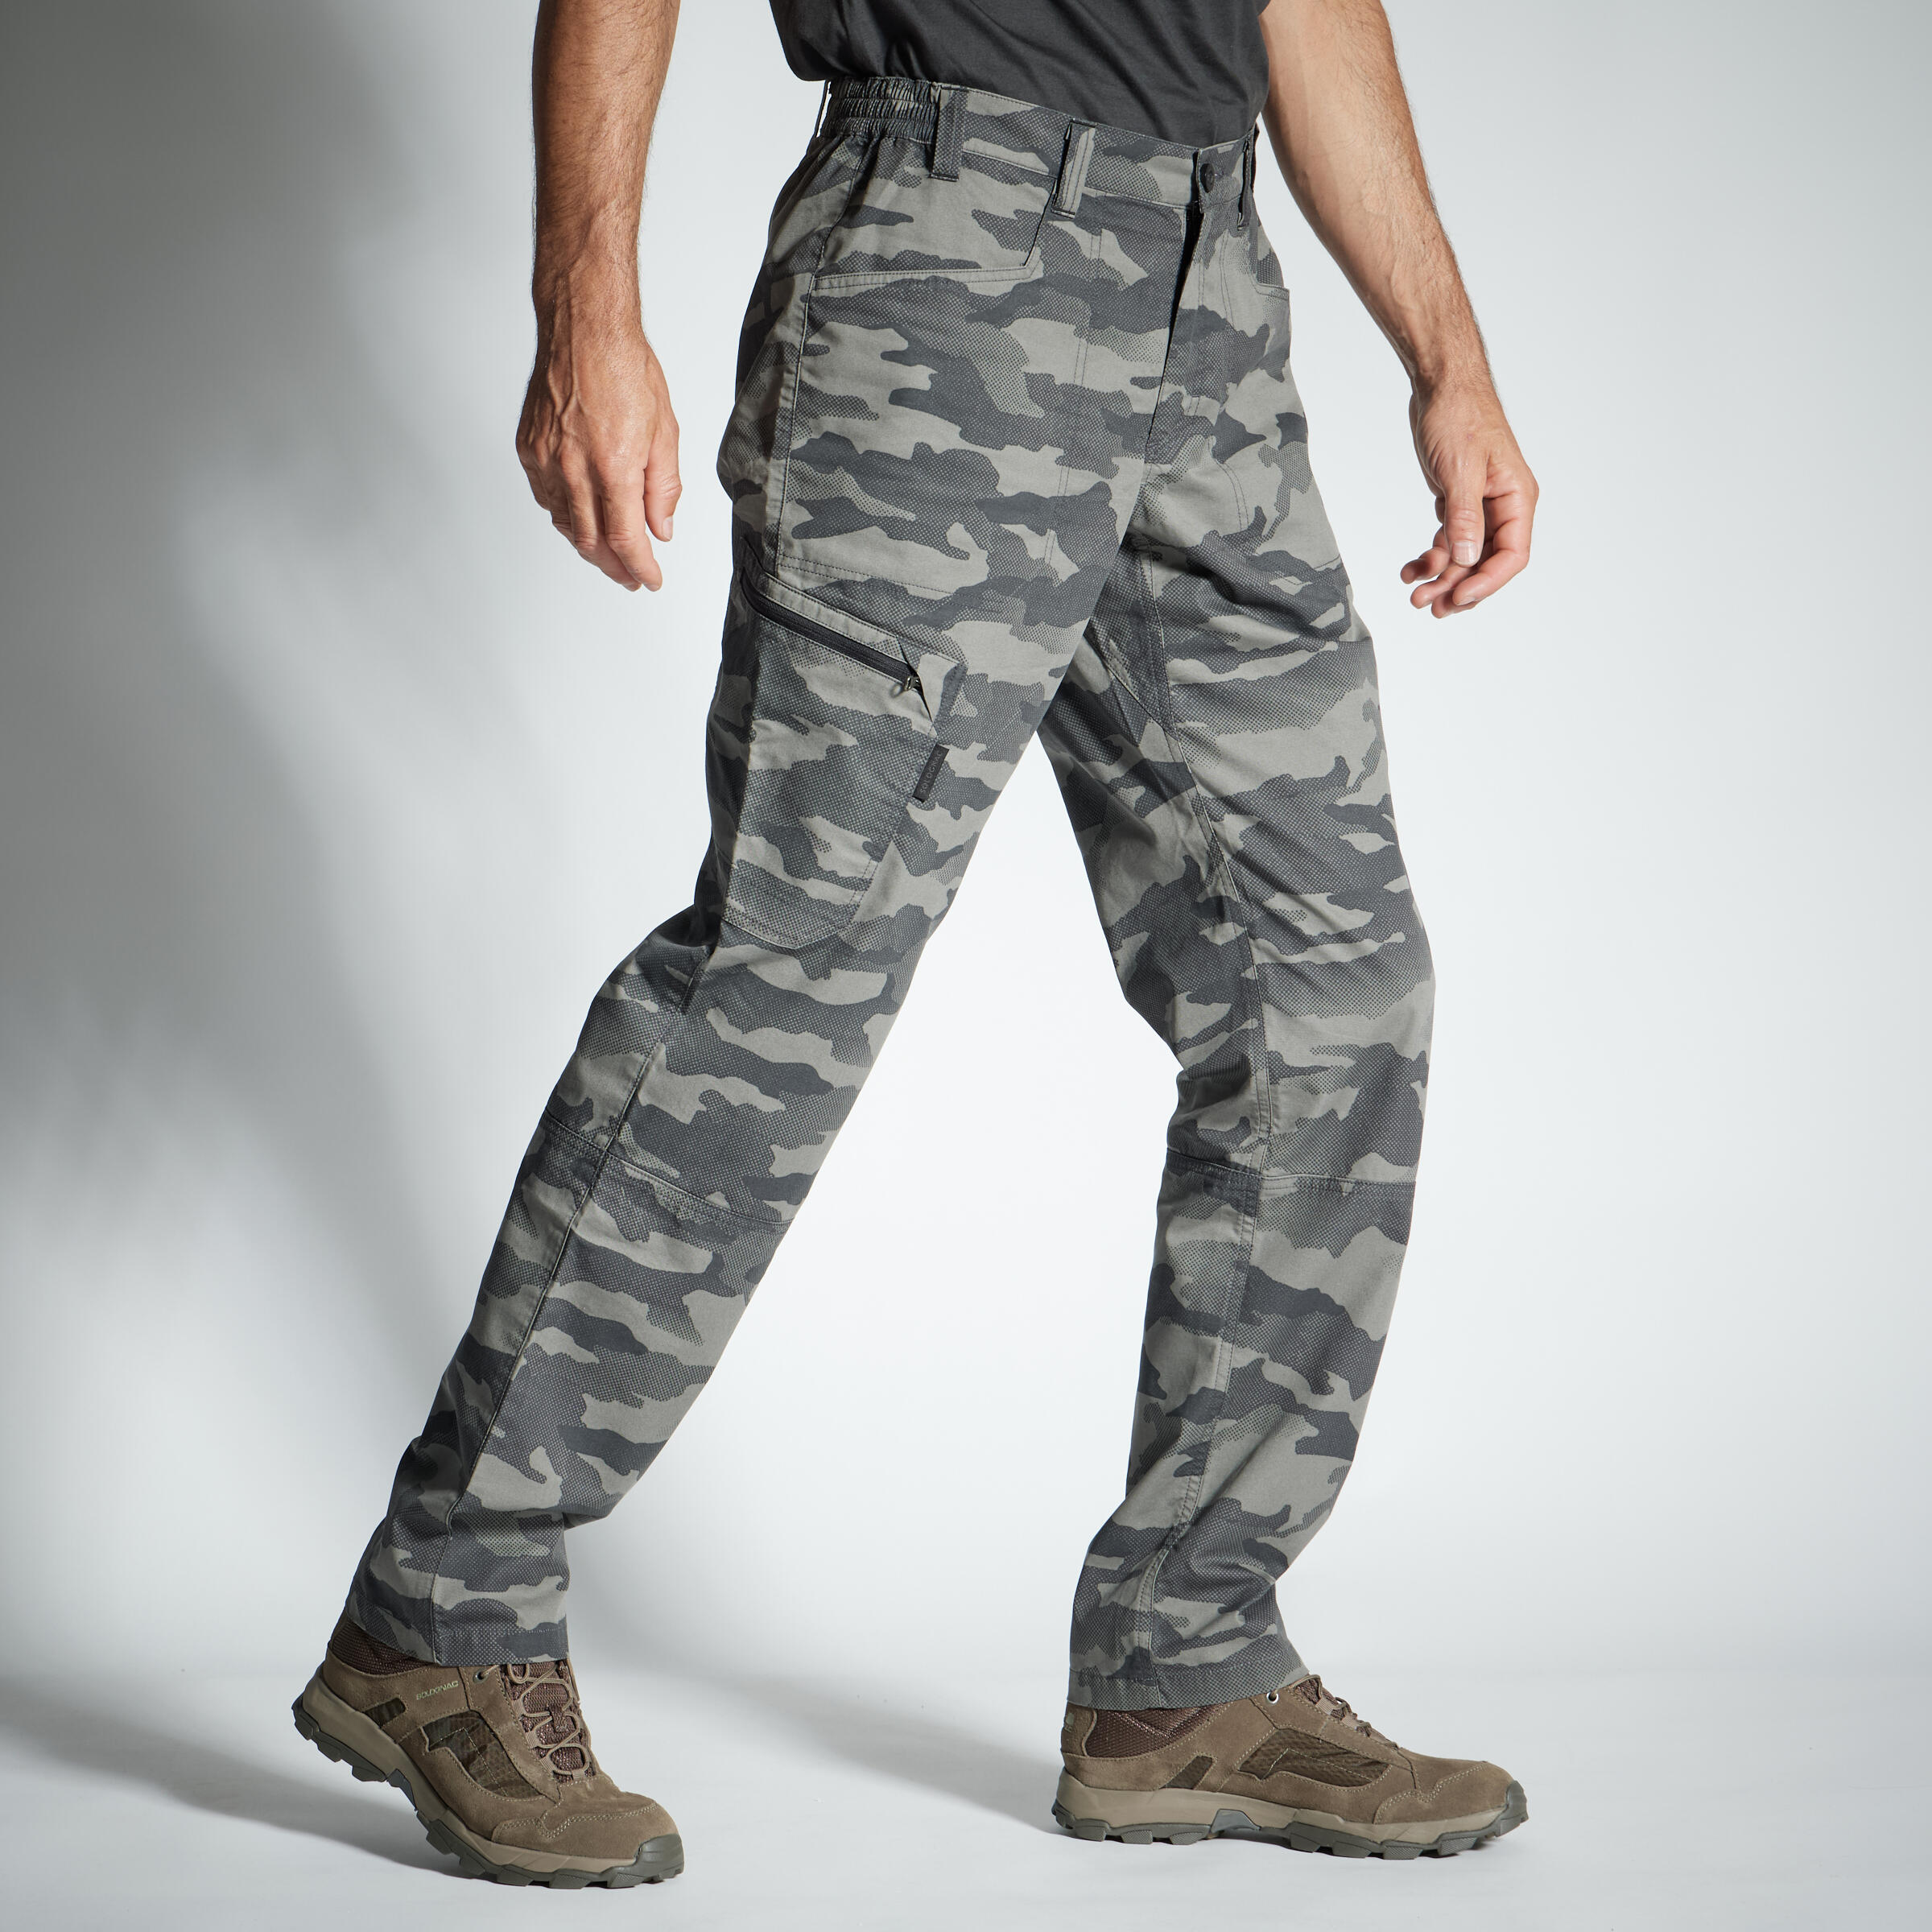 Pantalon Ușor 100 Camo gri Bărbați La Oferta Online decathlon imagine La Oferta Online